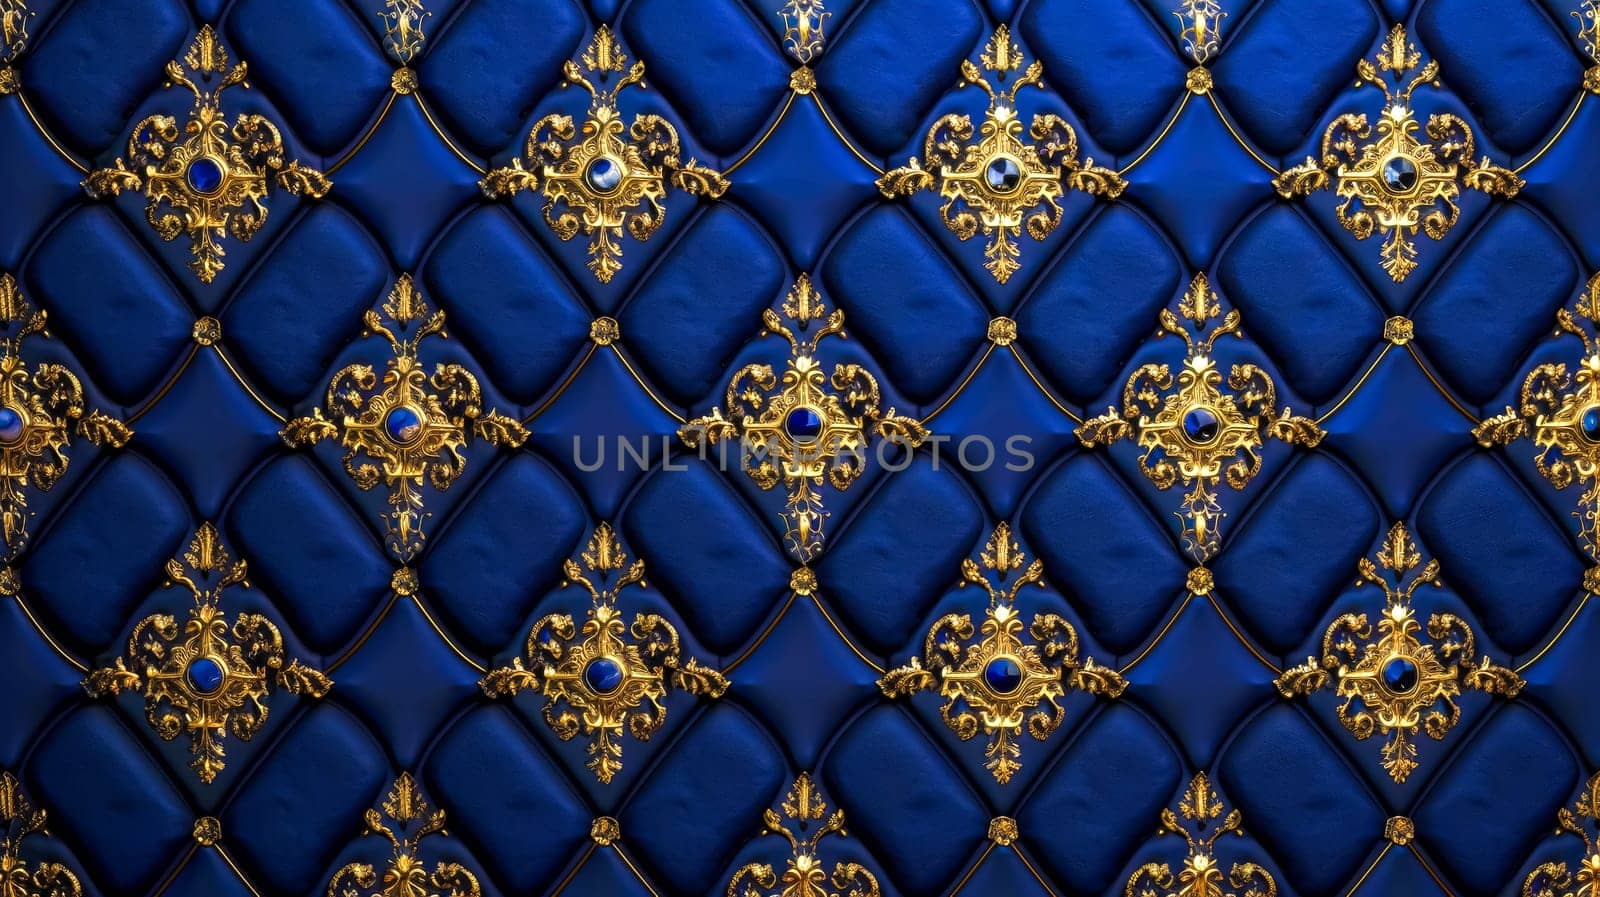 Elegant patterned wallpaper featuring a royal blue background with ornate golden details